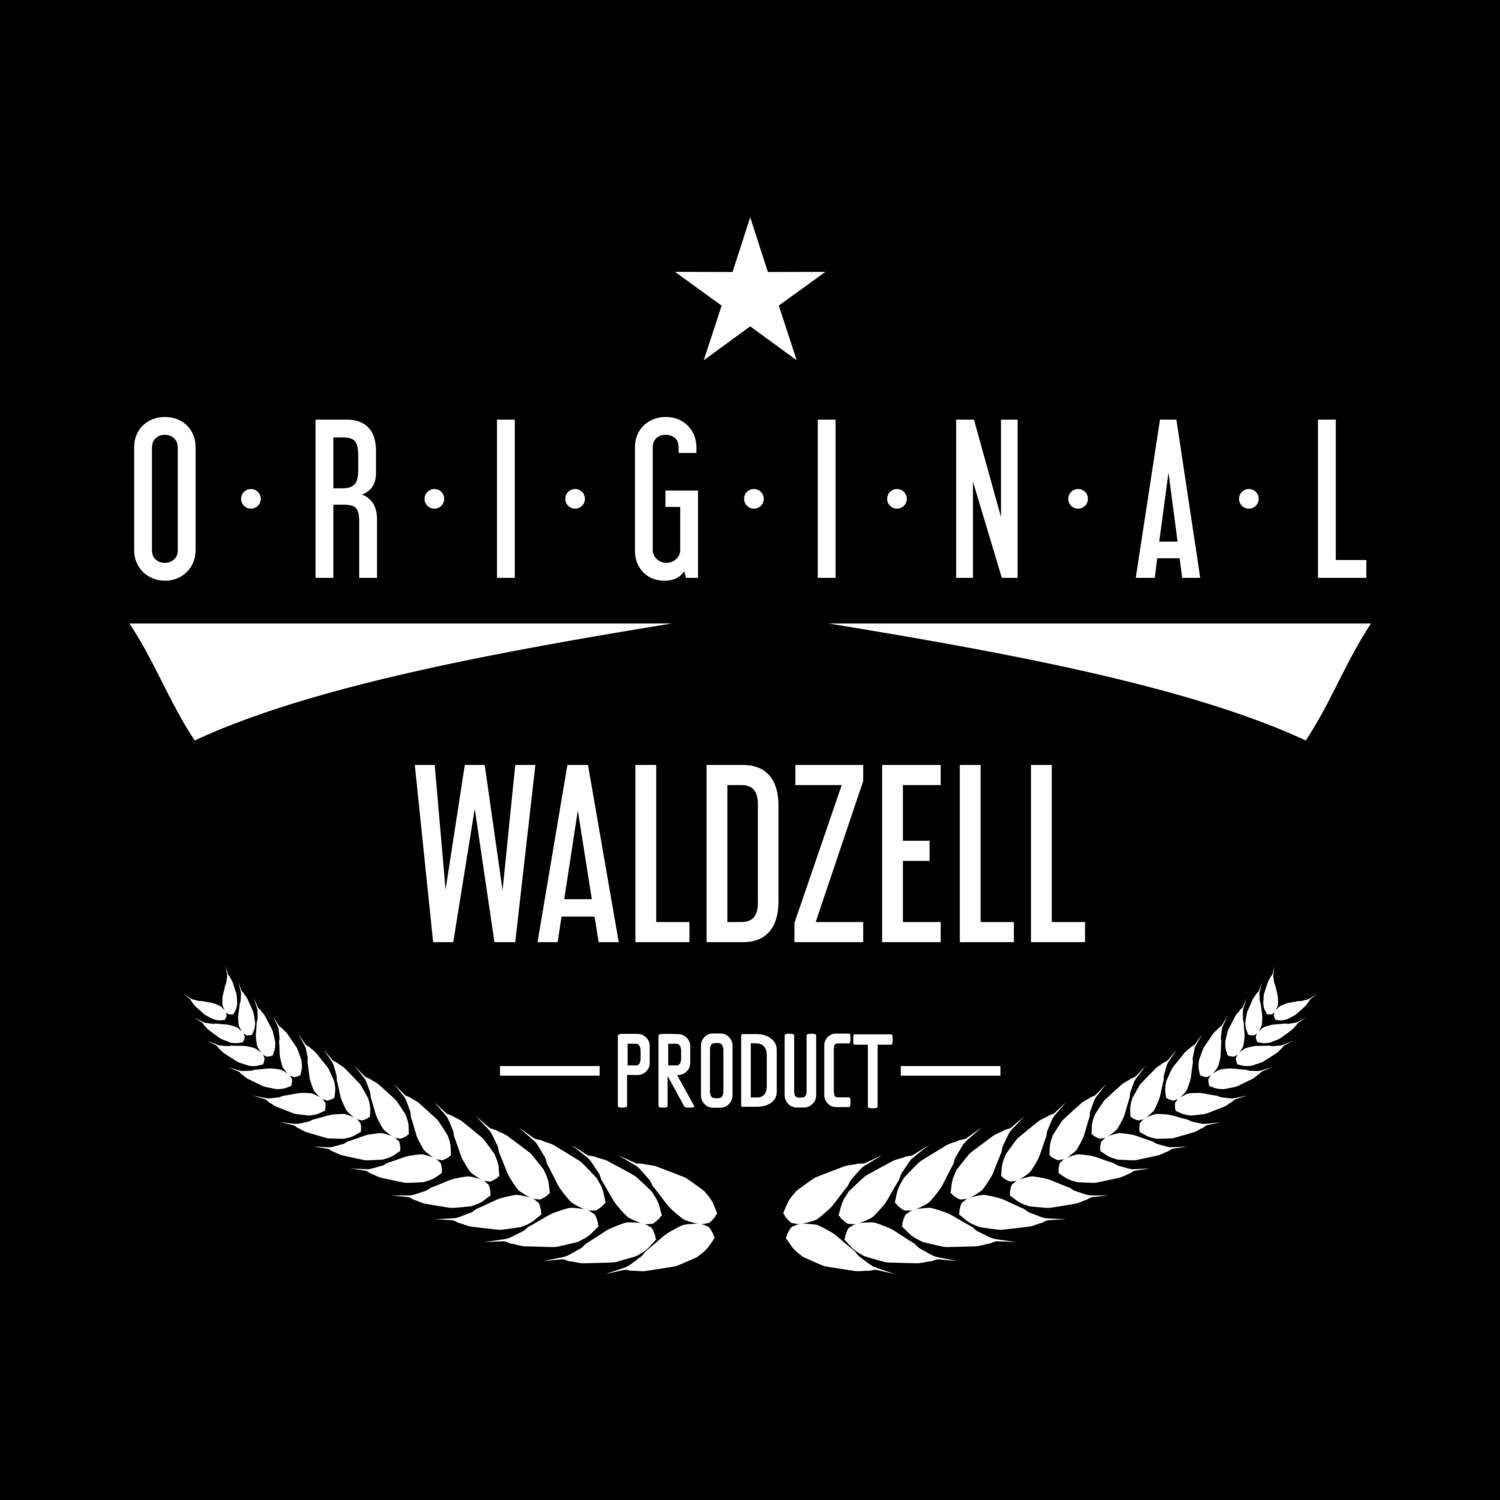 Waldzell T-Shirt »Original Product«